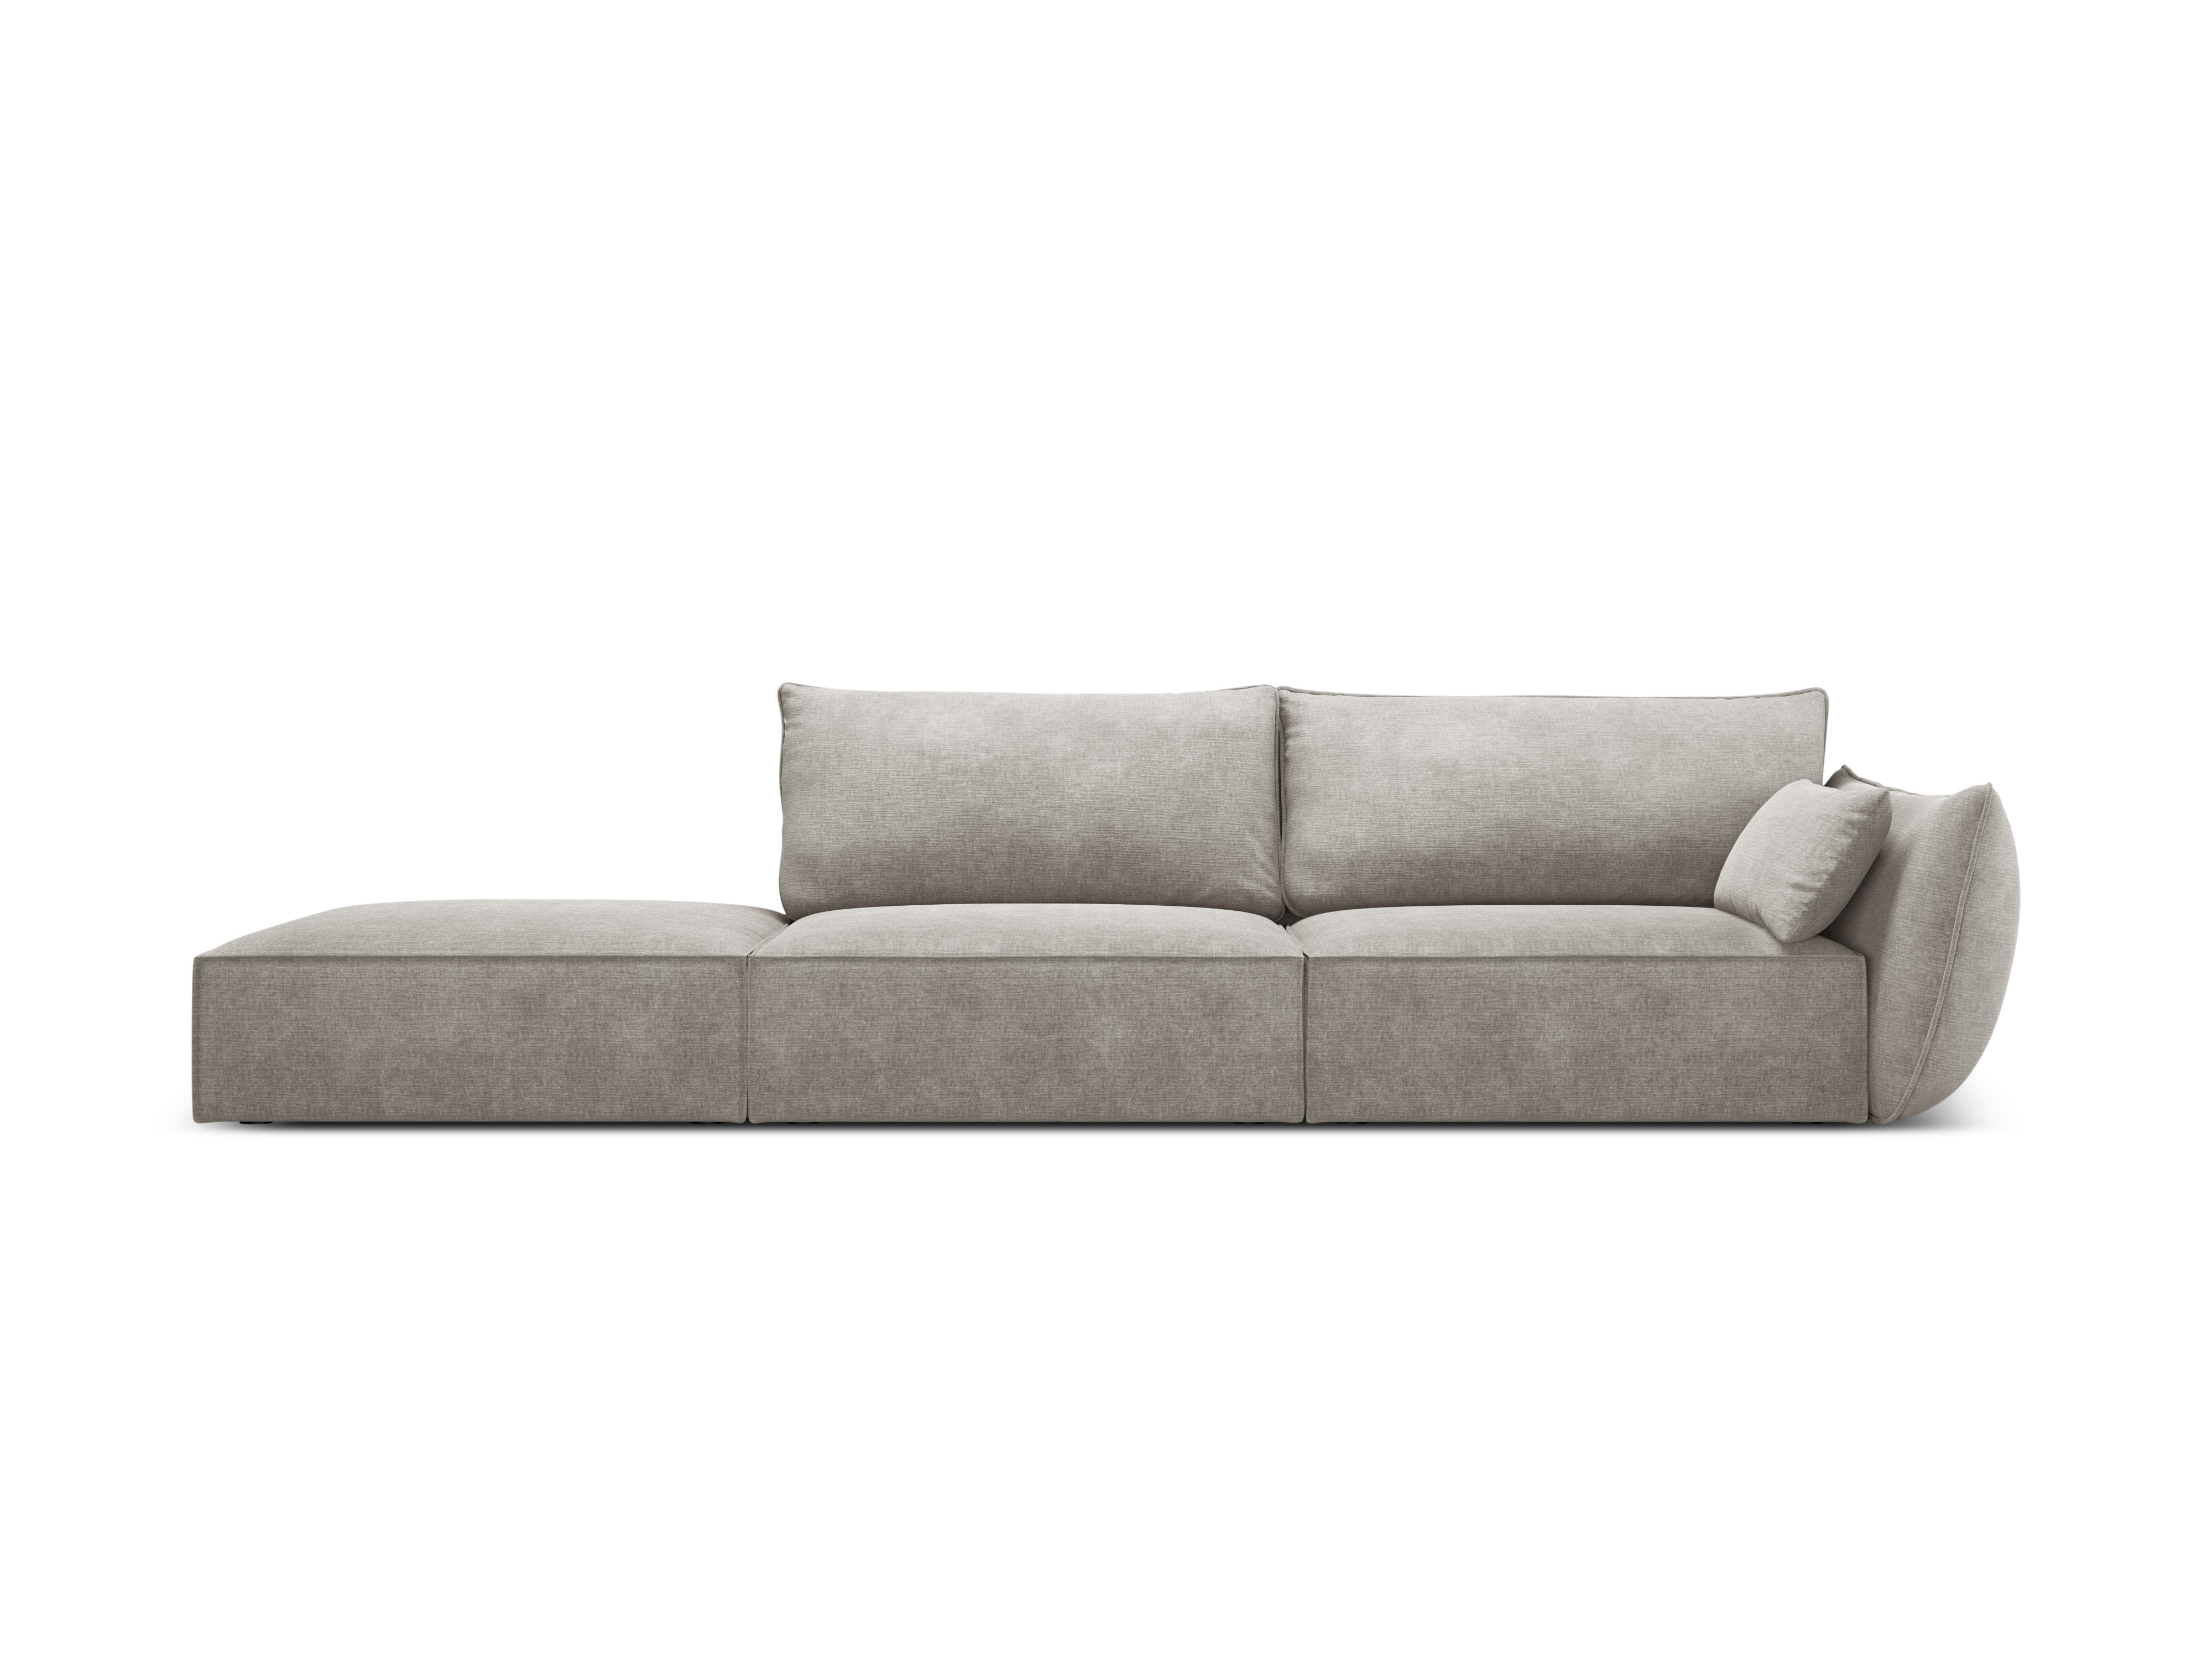 Left Sofa, "Vanda", 4 Seats, 286x100x85
Made in Europe, Mazzini Sofas, Eye on Design